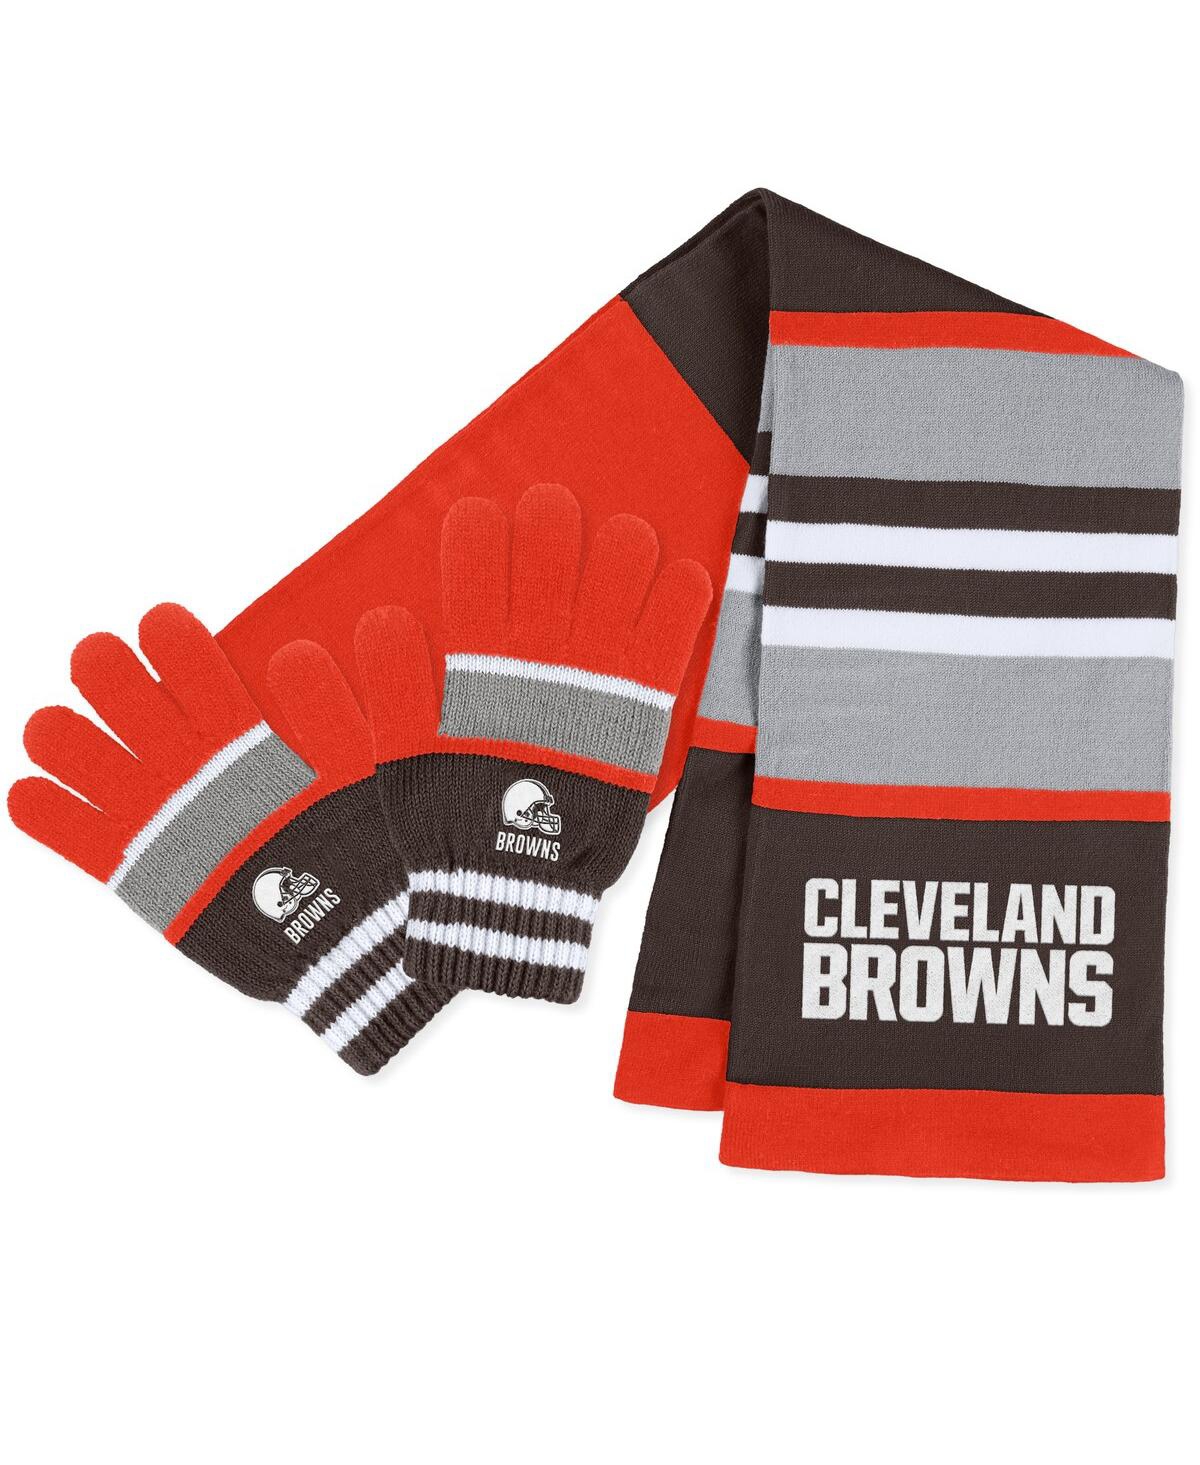 Wear By Erin Andrews Women's  Cleveland Browns Stripe Glove And Scarf Set In Orange